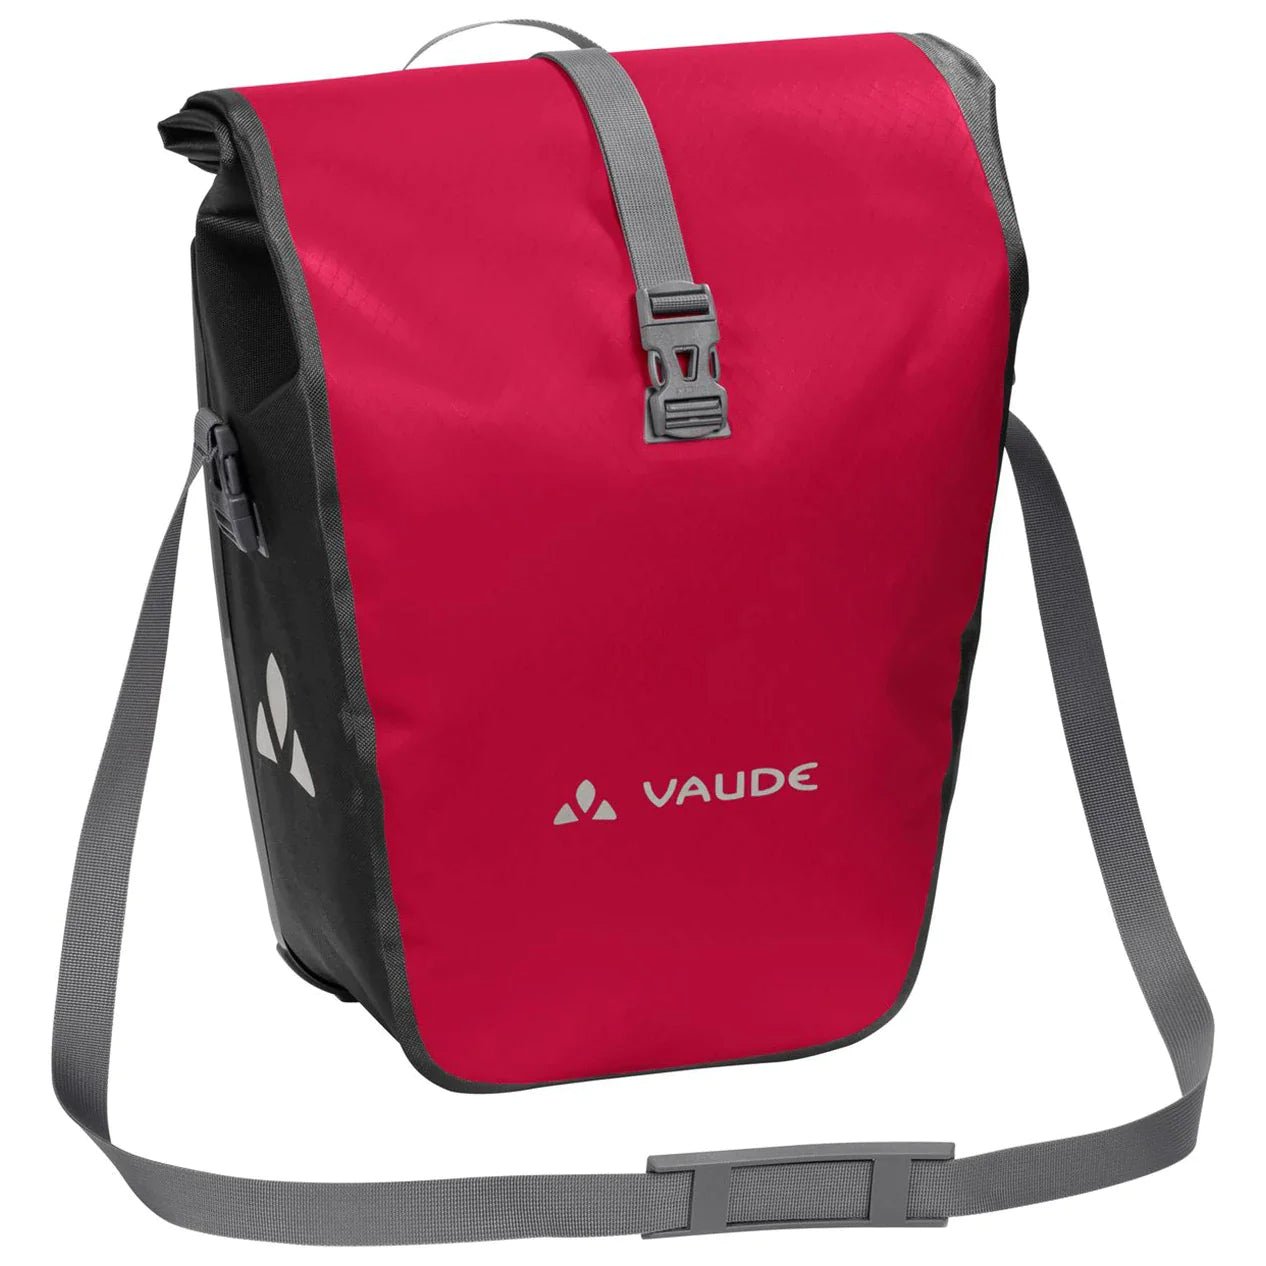 Vaude Bike Sports Aqua Back Single bike bag 37 cm - red